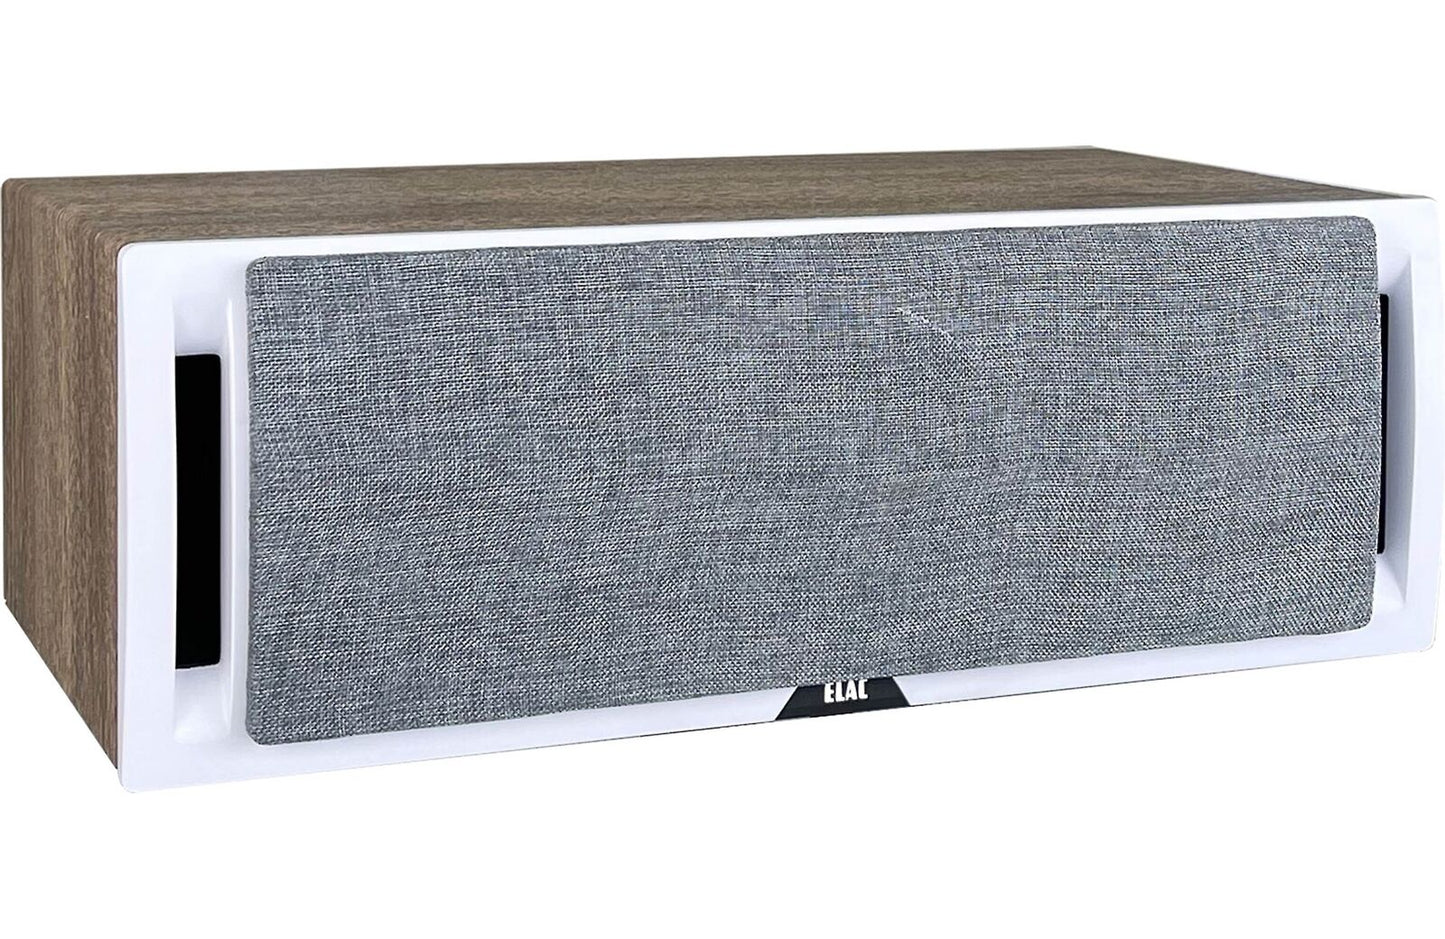 ELAC UCR52-W 5 1/4” Uni-Fi Reference Center Speaker - White with Oak